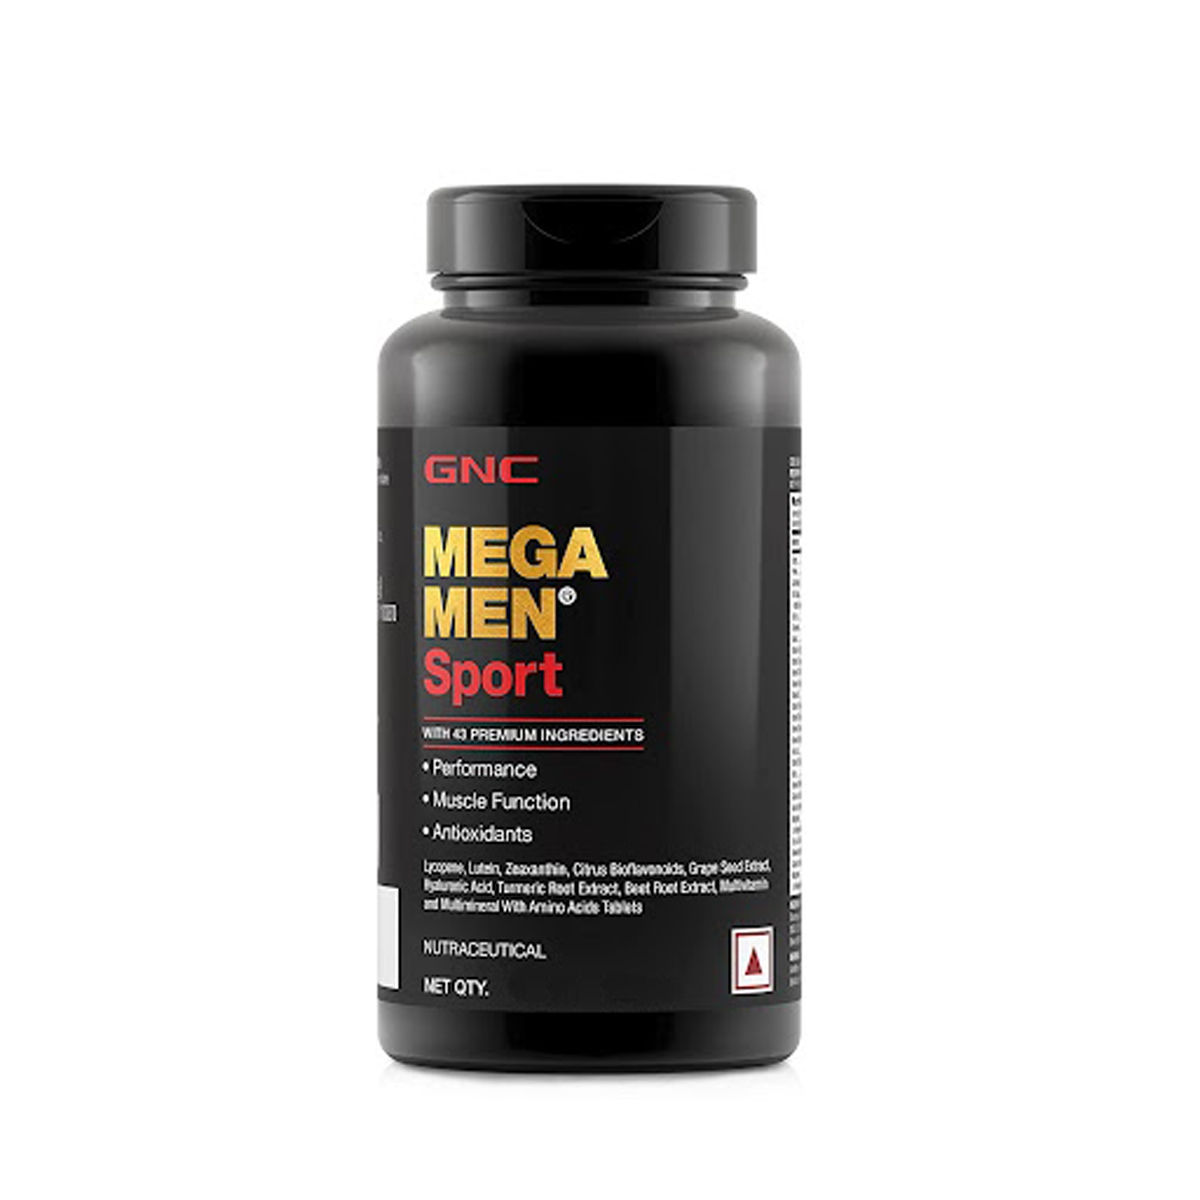 Buy GNC Mega Men Sport with 43 Premium Ingredients, 60 Tablets Online